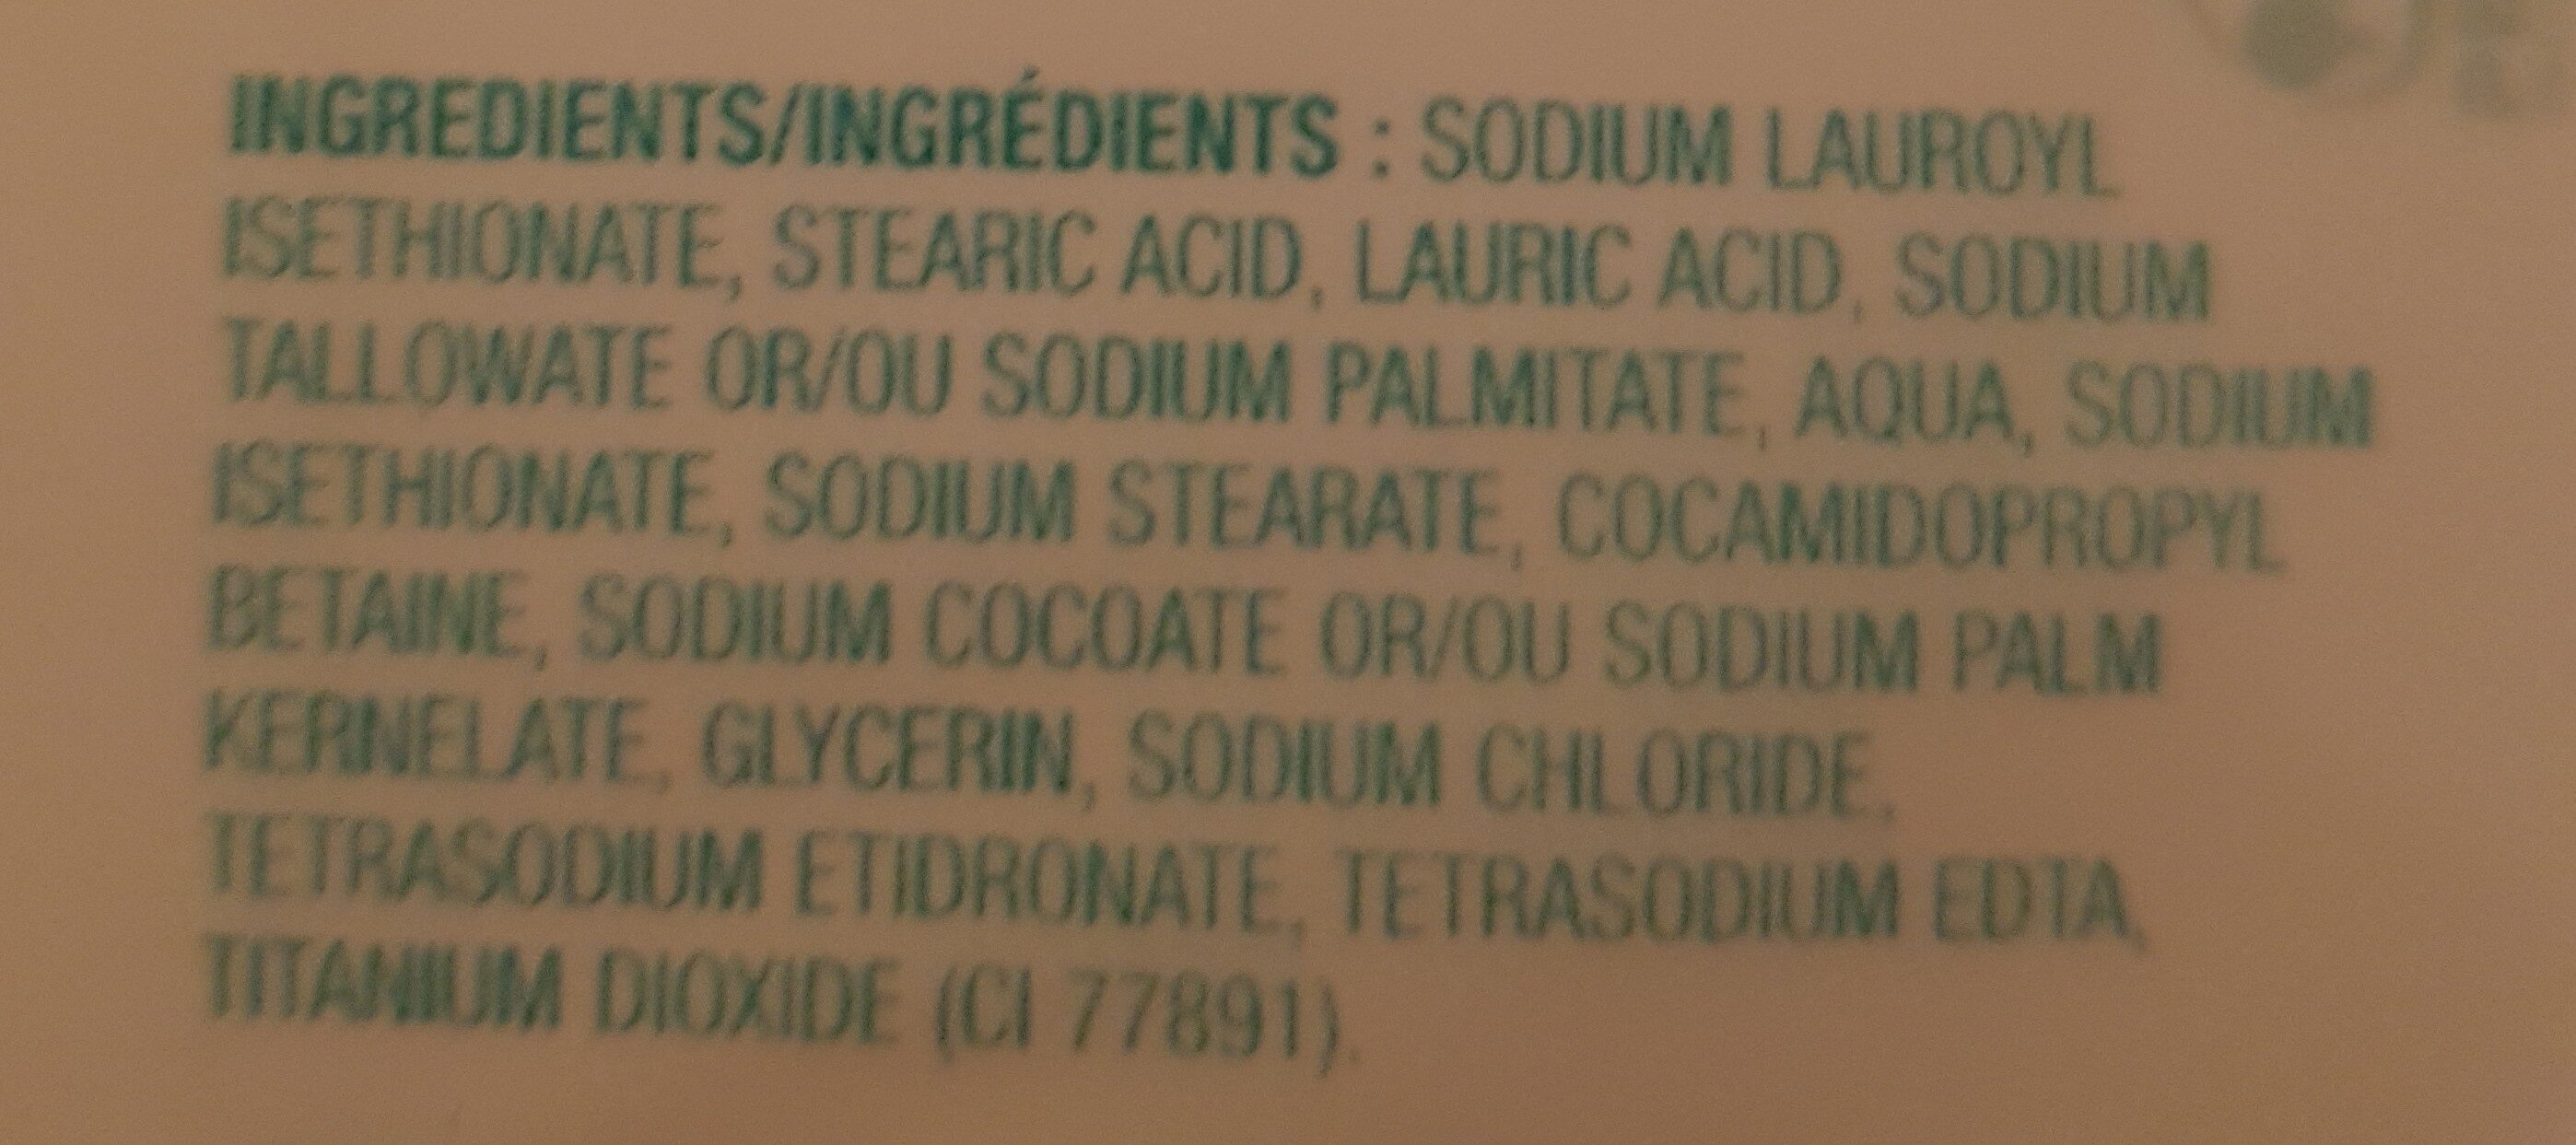 Soap Bar - Ingredients - en